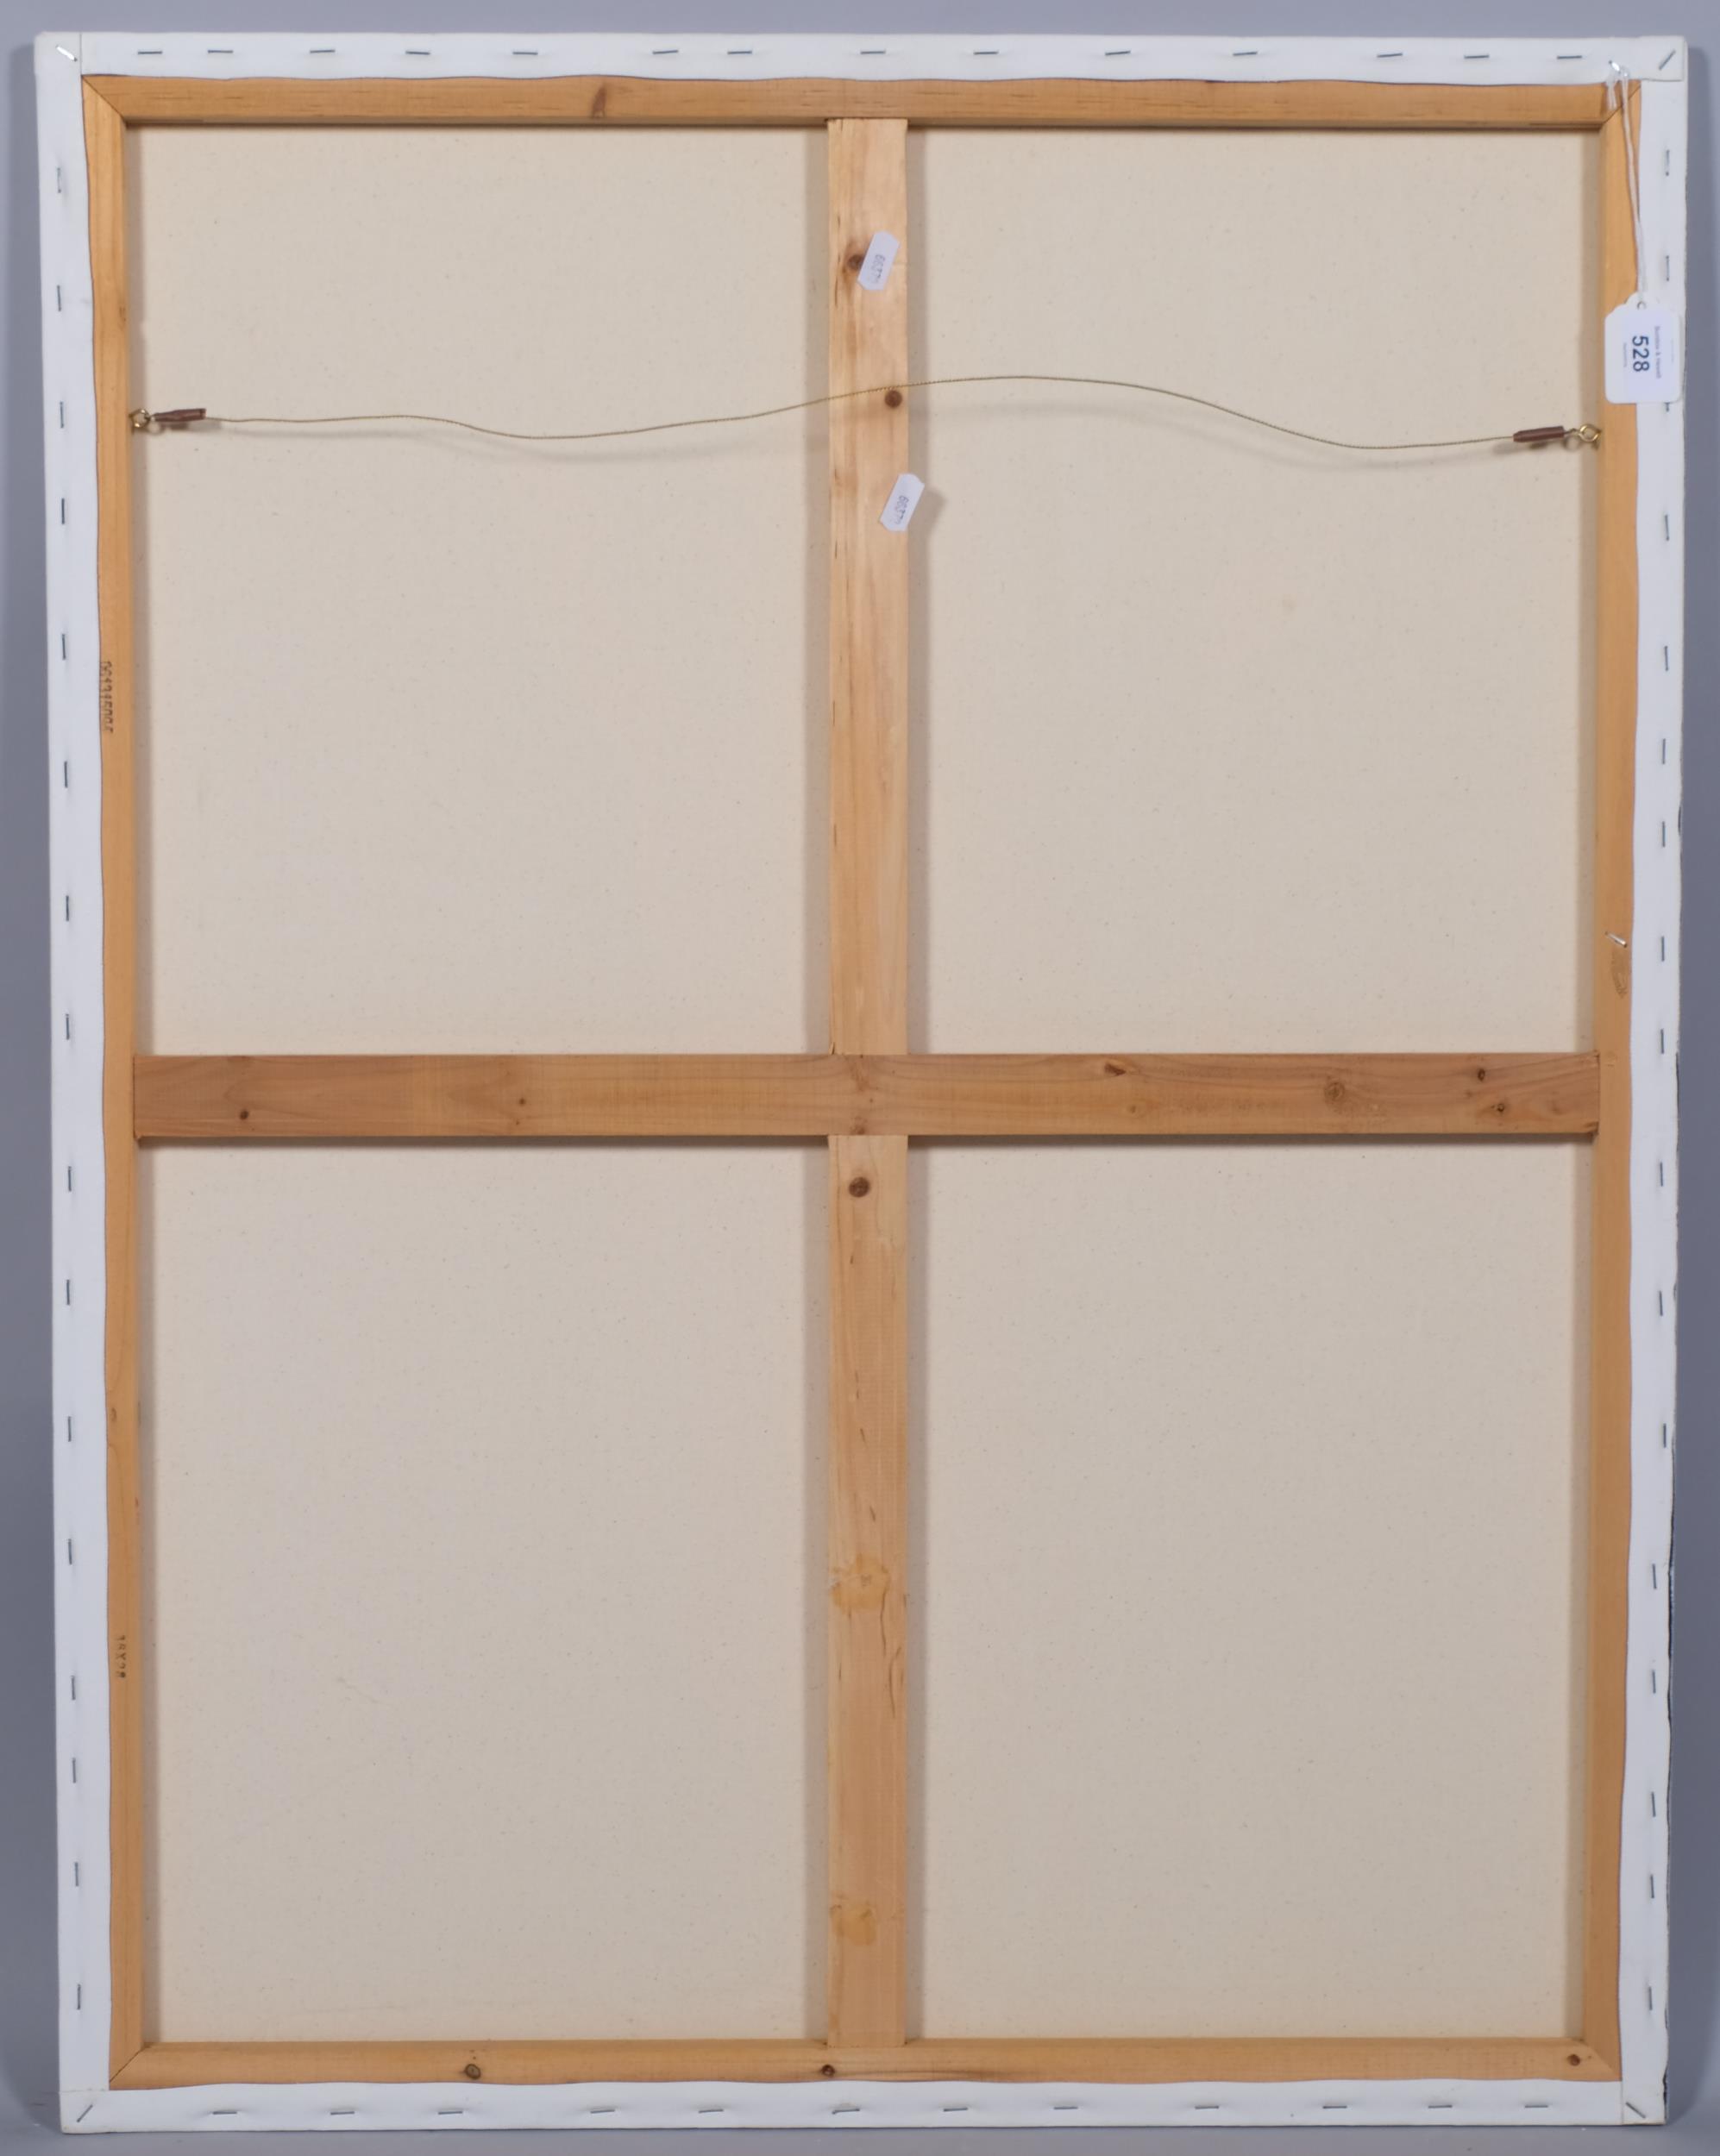 Steve Houstoun (born 1953), abstract with nude figure, oil on canvas, 91cm x 71cm, unframed Very - Image 4 of 4